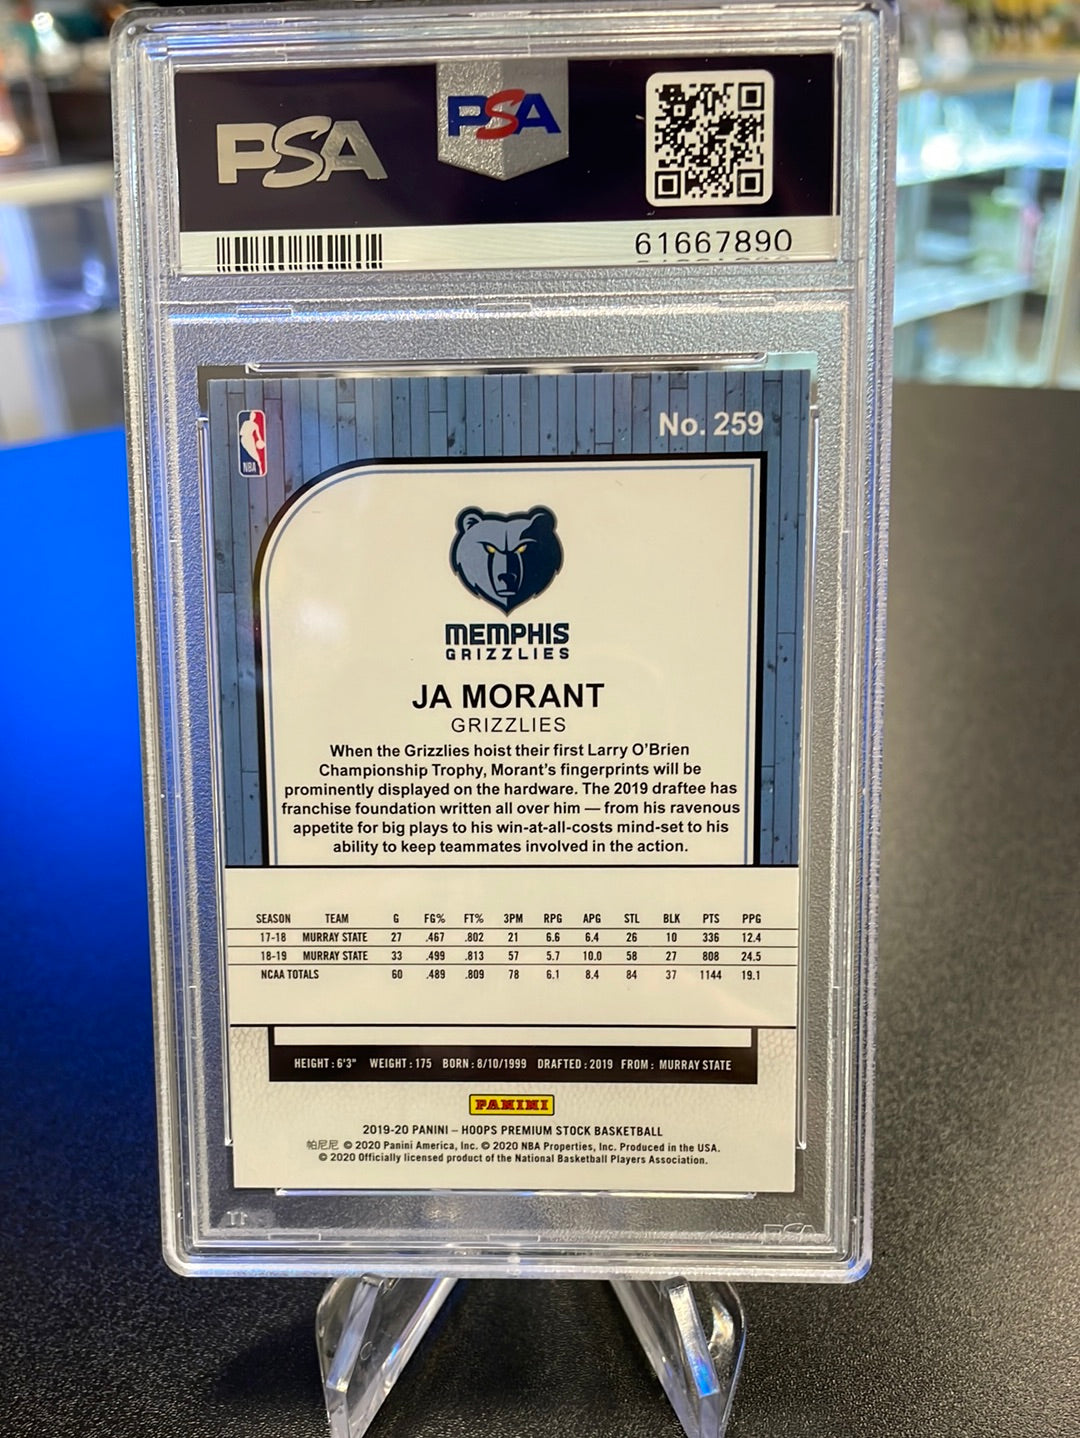 Ja Morant 2019 NBA Hoops Premium Stock Rookie Card, PSA 10 Gem Mint